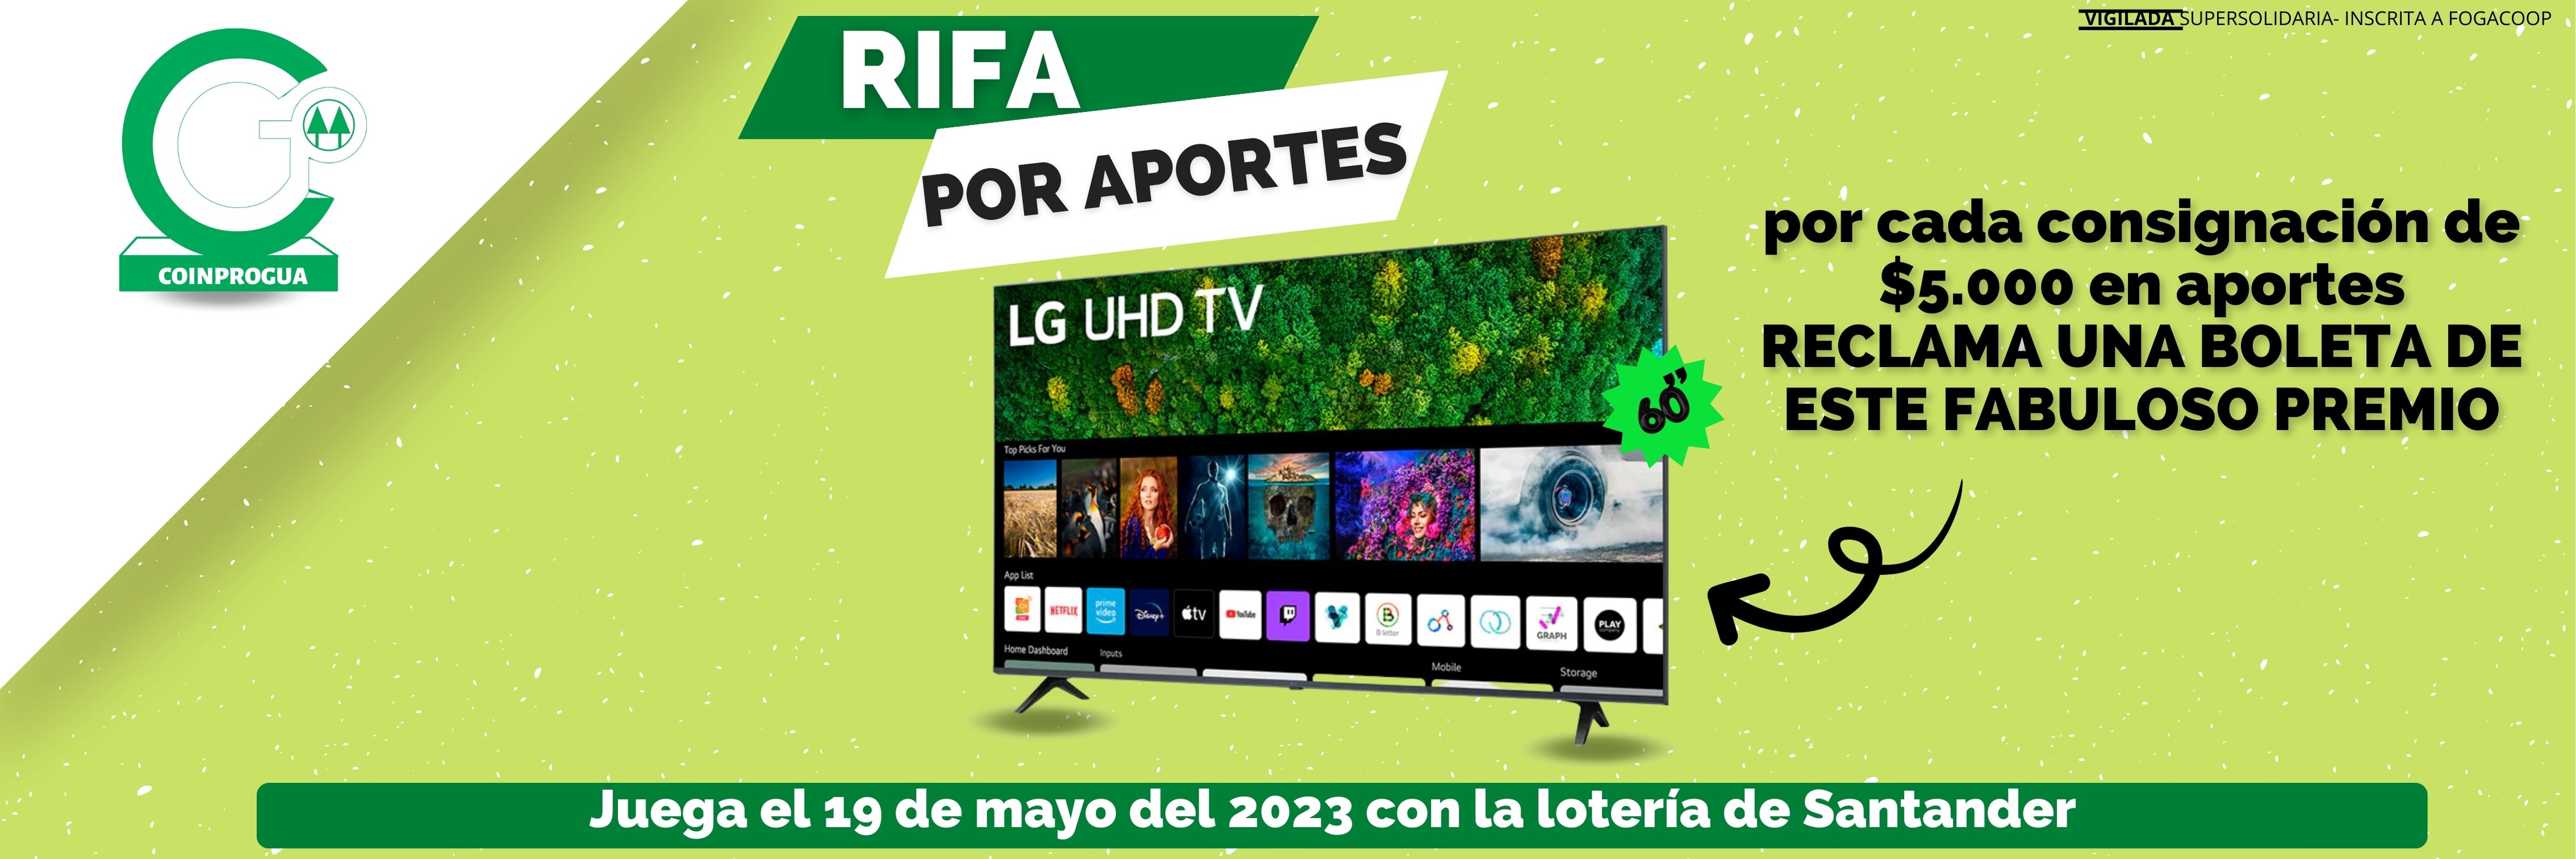 rifa tv  (1200 × 400 mm).jpg